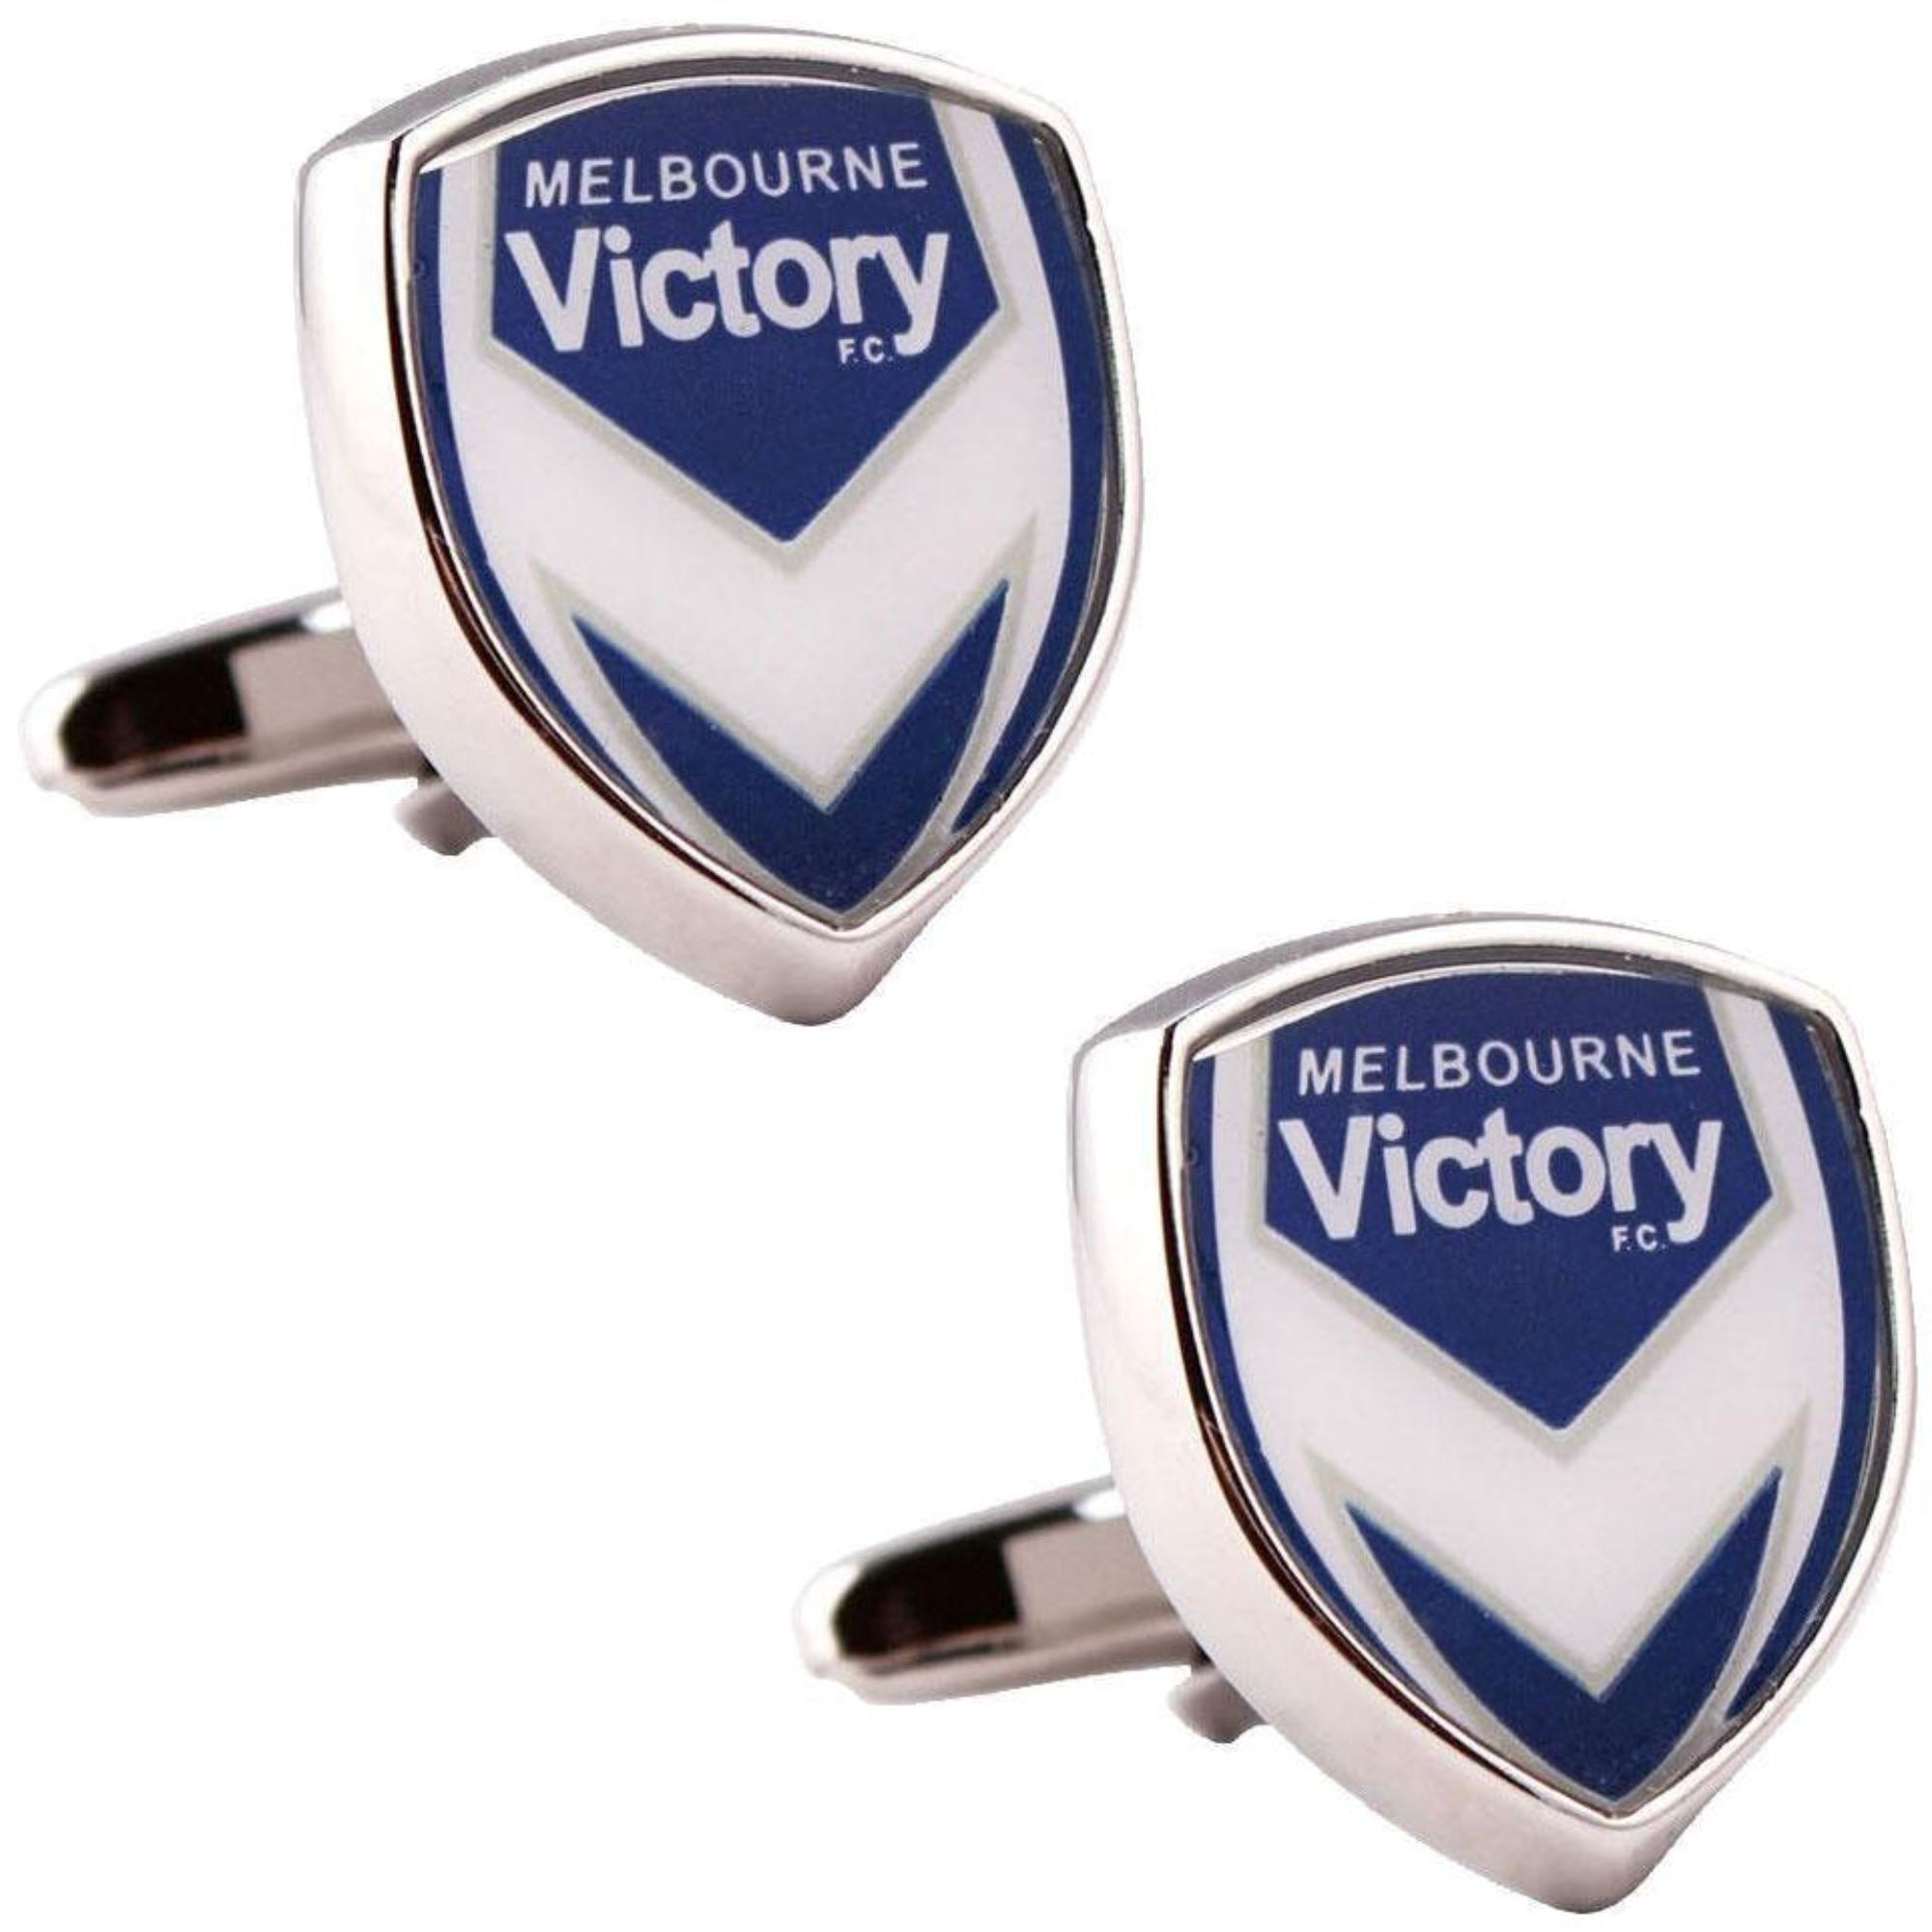 Melbourne Victory FC A-League Football Cufflinks Novelty Cufflinks A-League Melbourne Victory FC A-League Football Cufflinks 